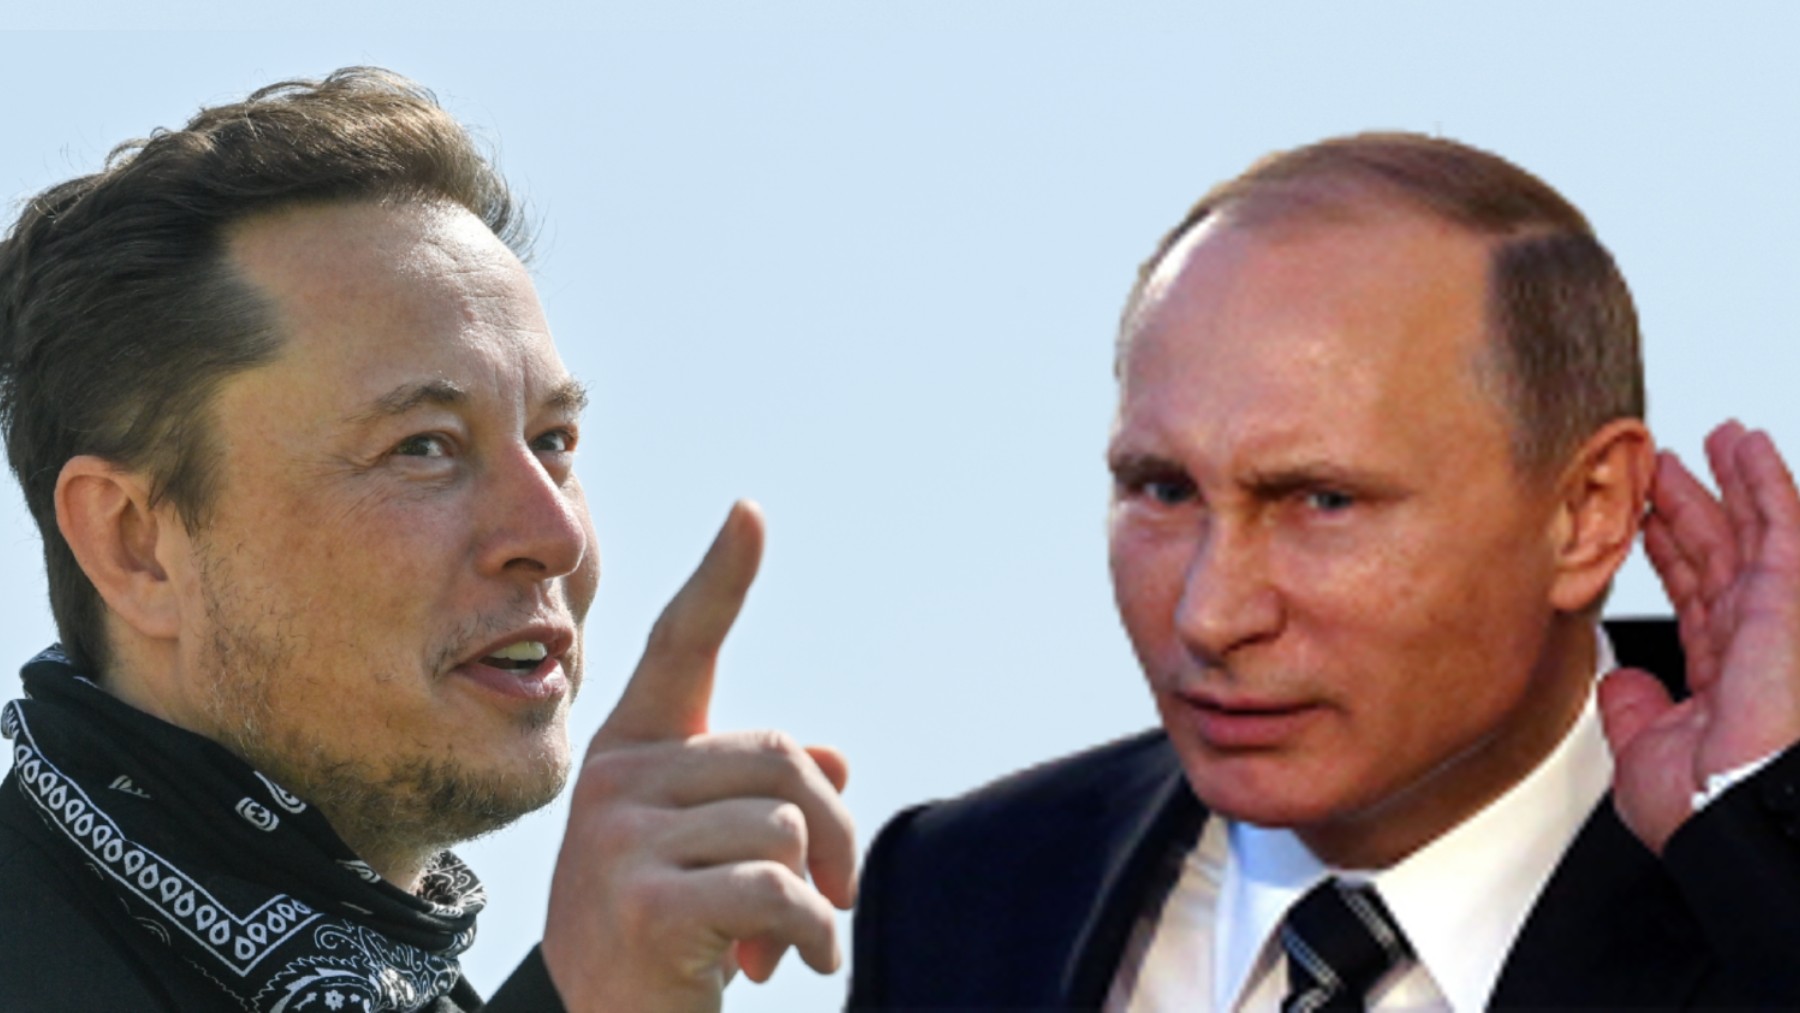 Elon Musk y Vladimir Putin